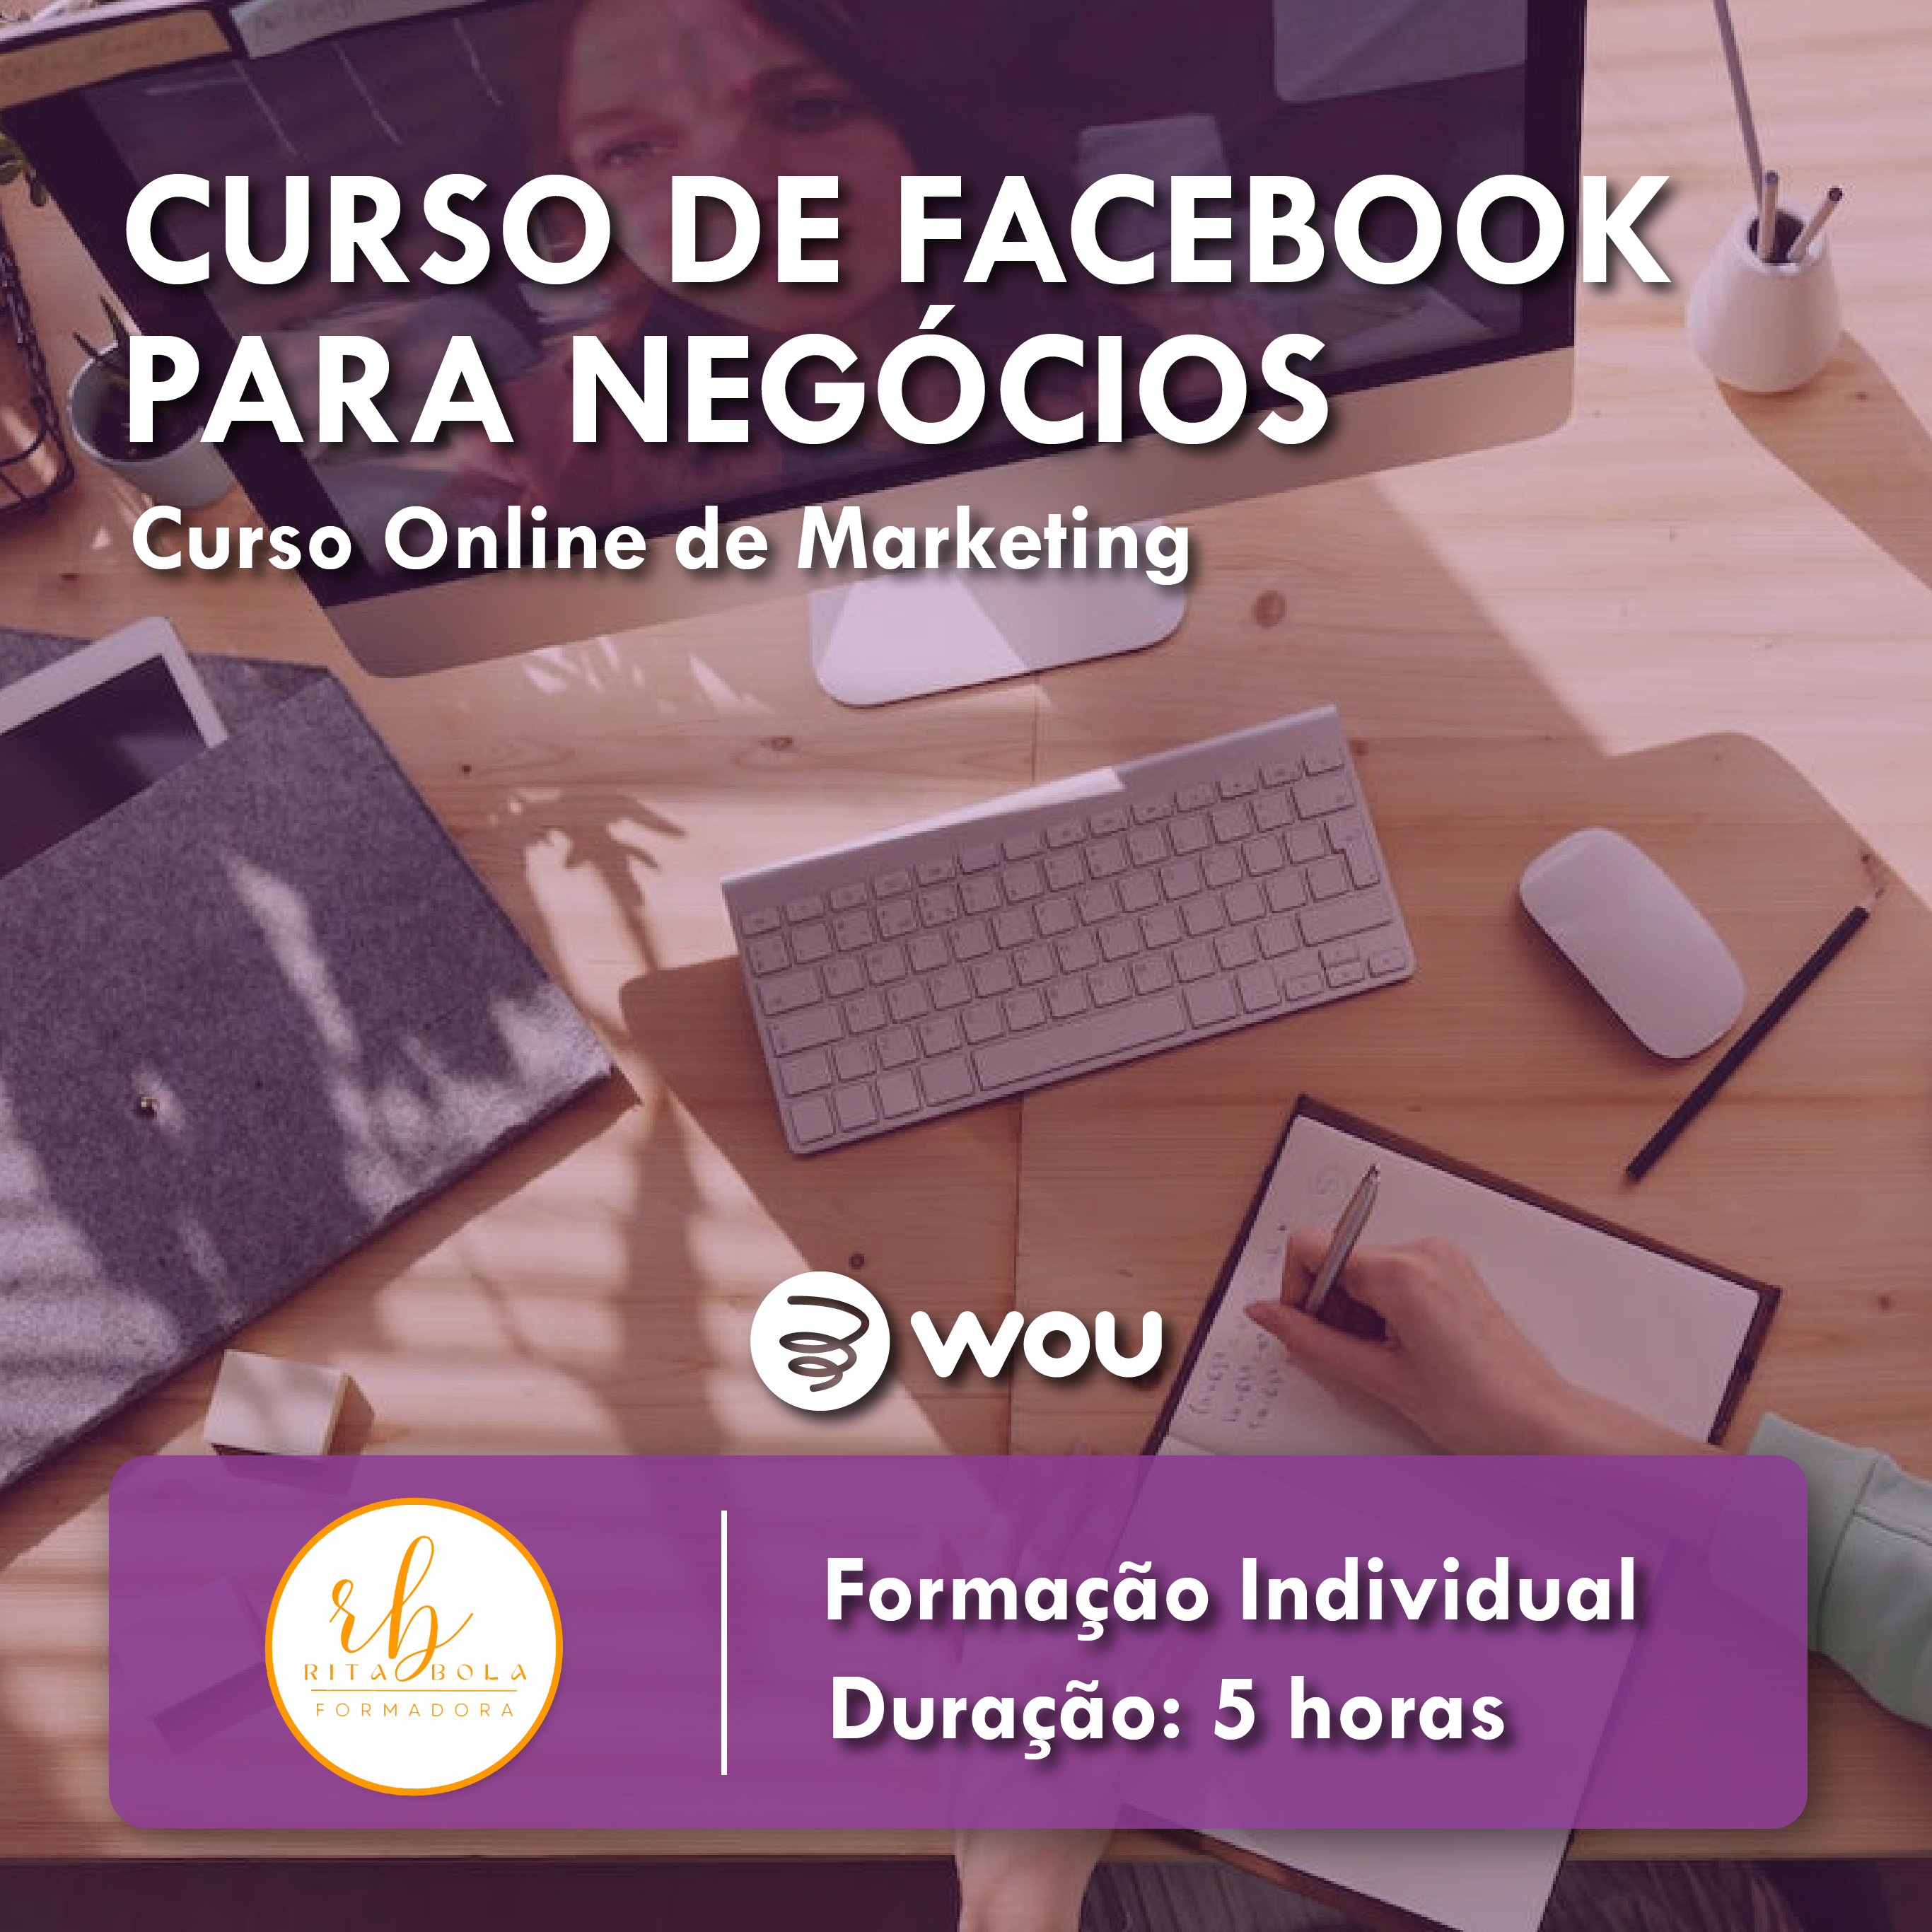 Curso Online de Facebook para Negócios